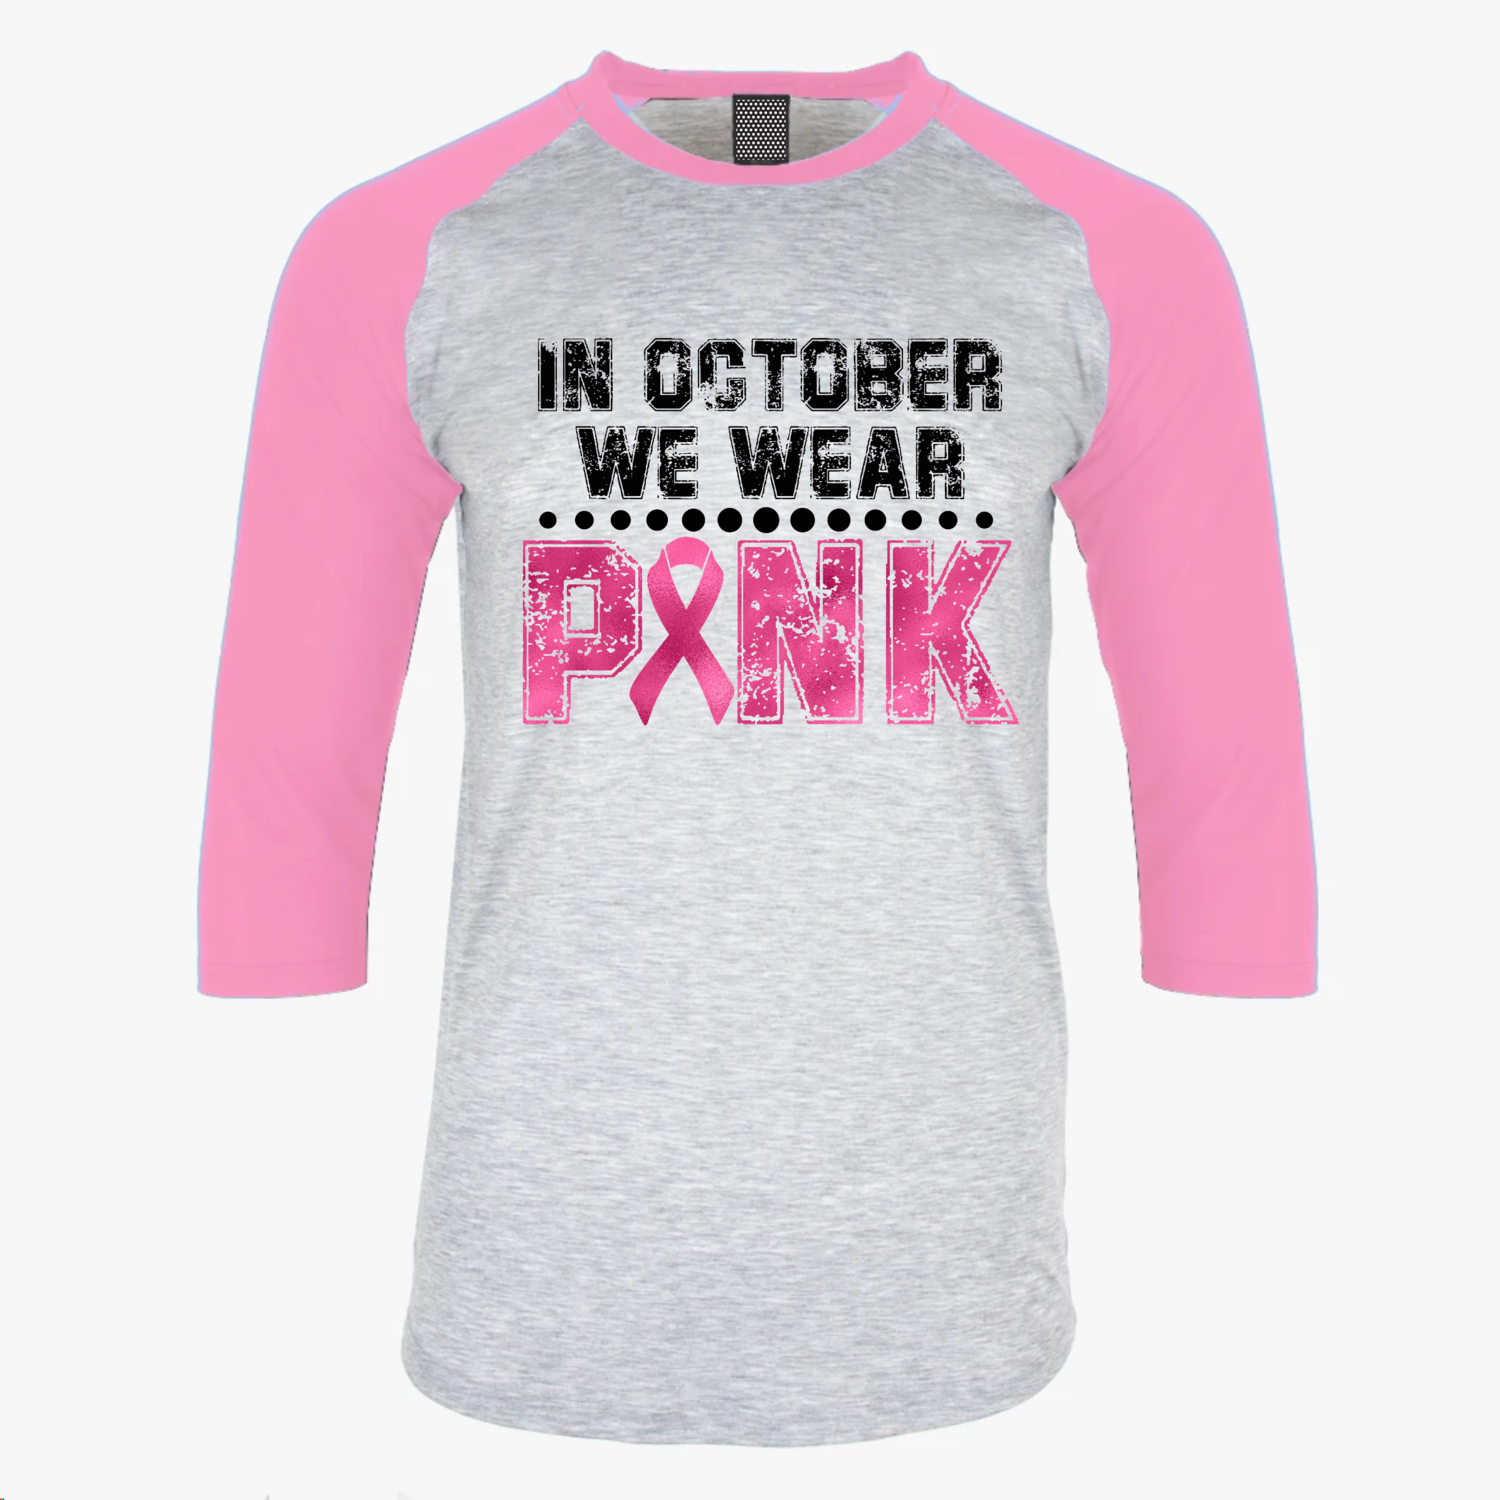 In October, We wear PINK